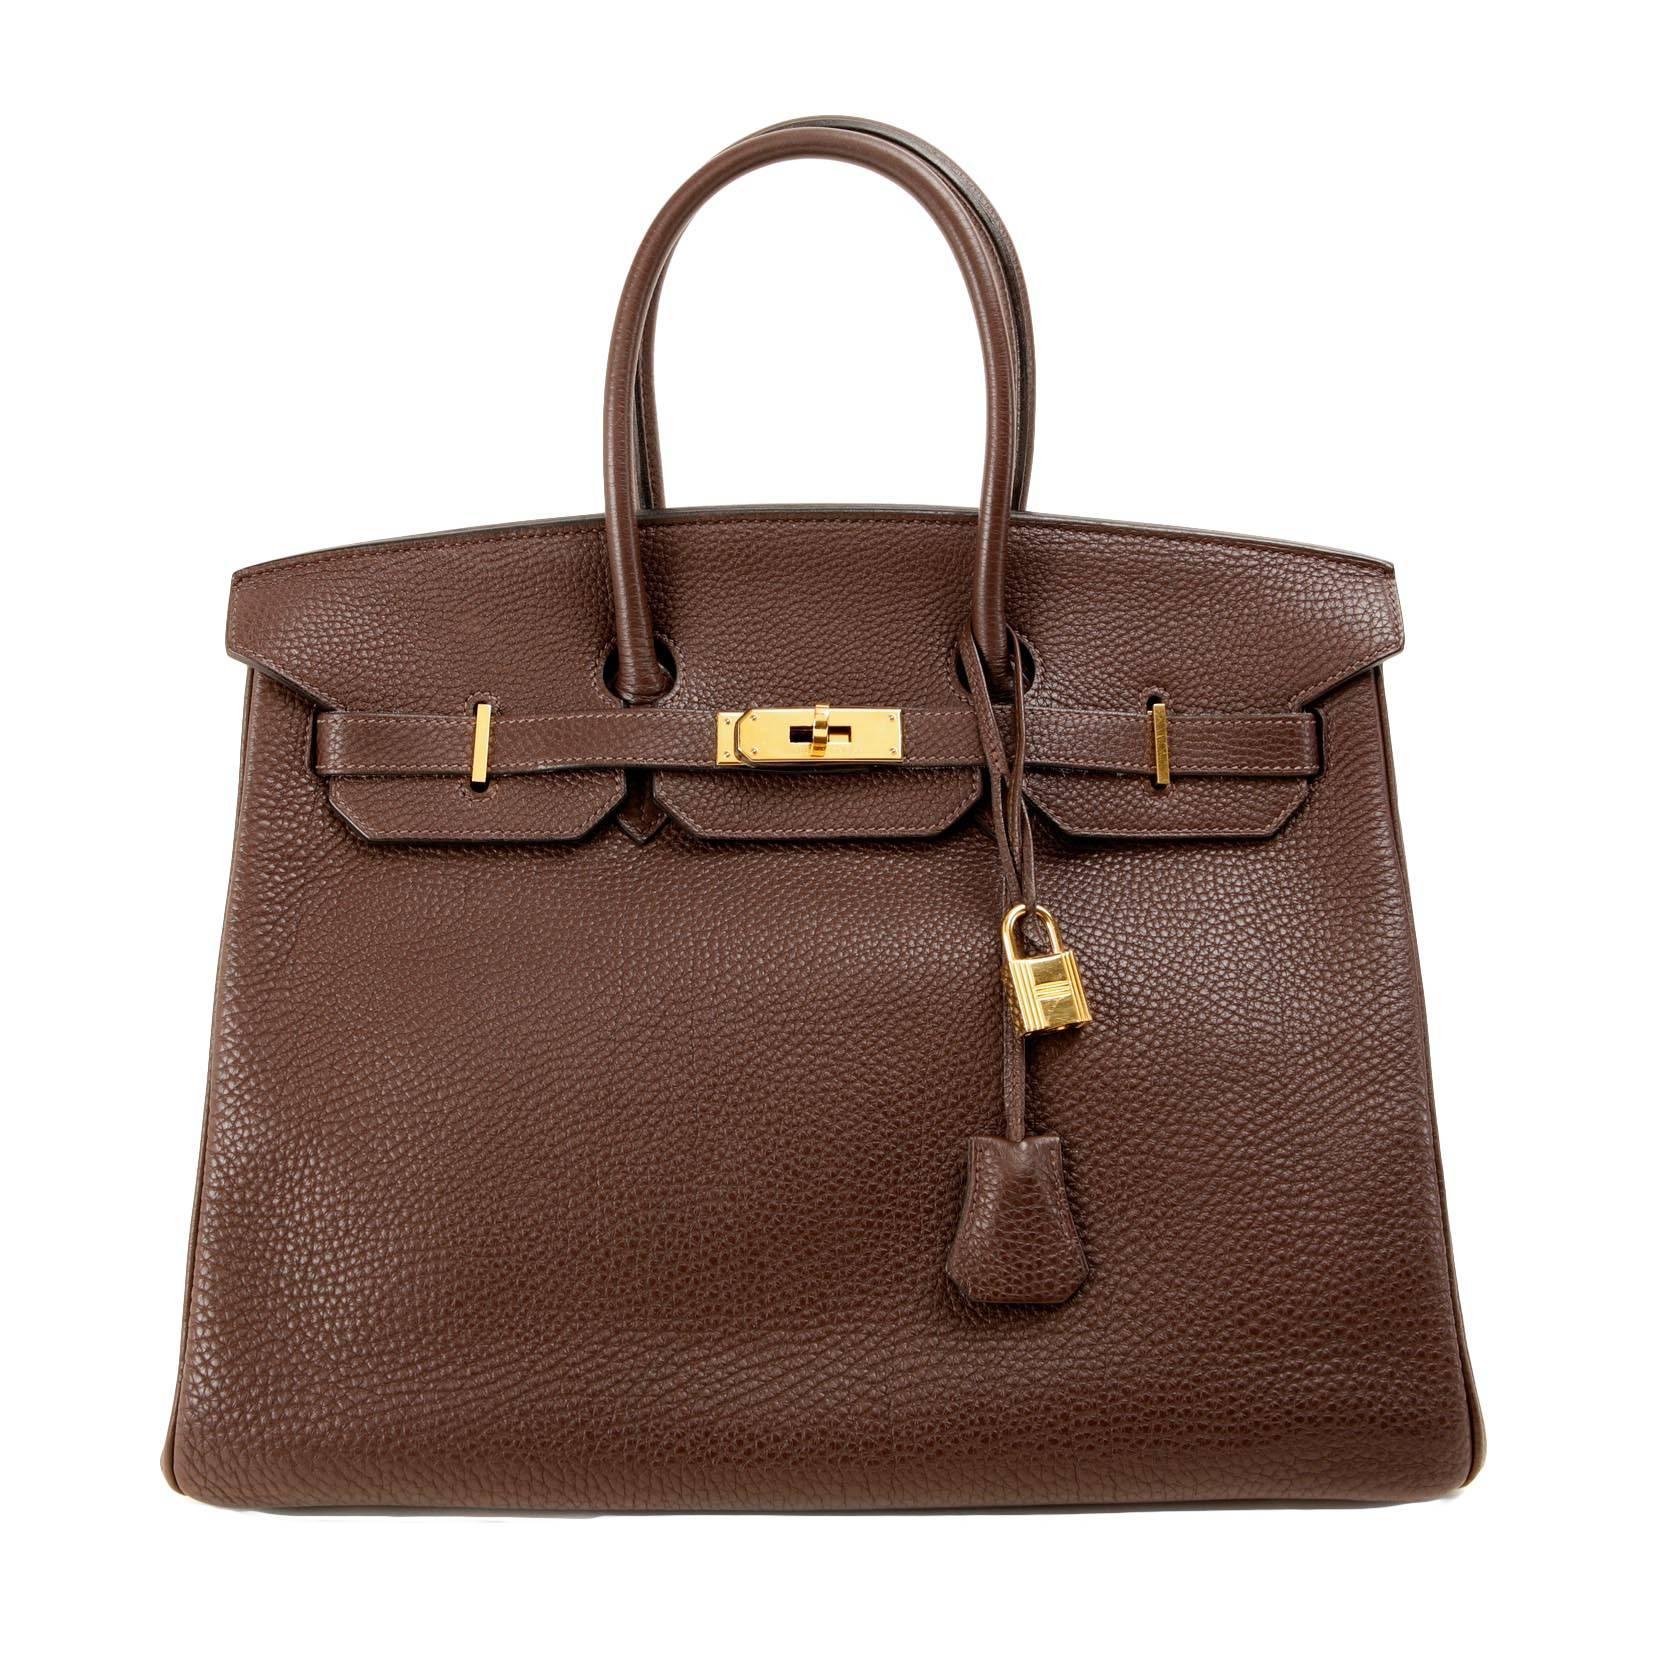 Hermès  Brown Togo Leather 35 cm Birkin Bag with GHW